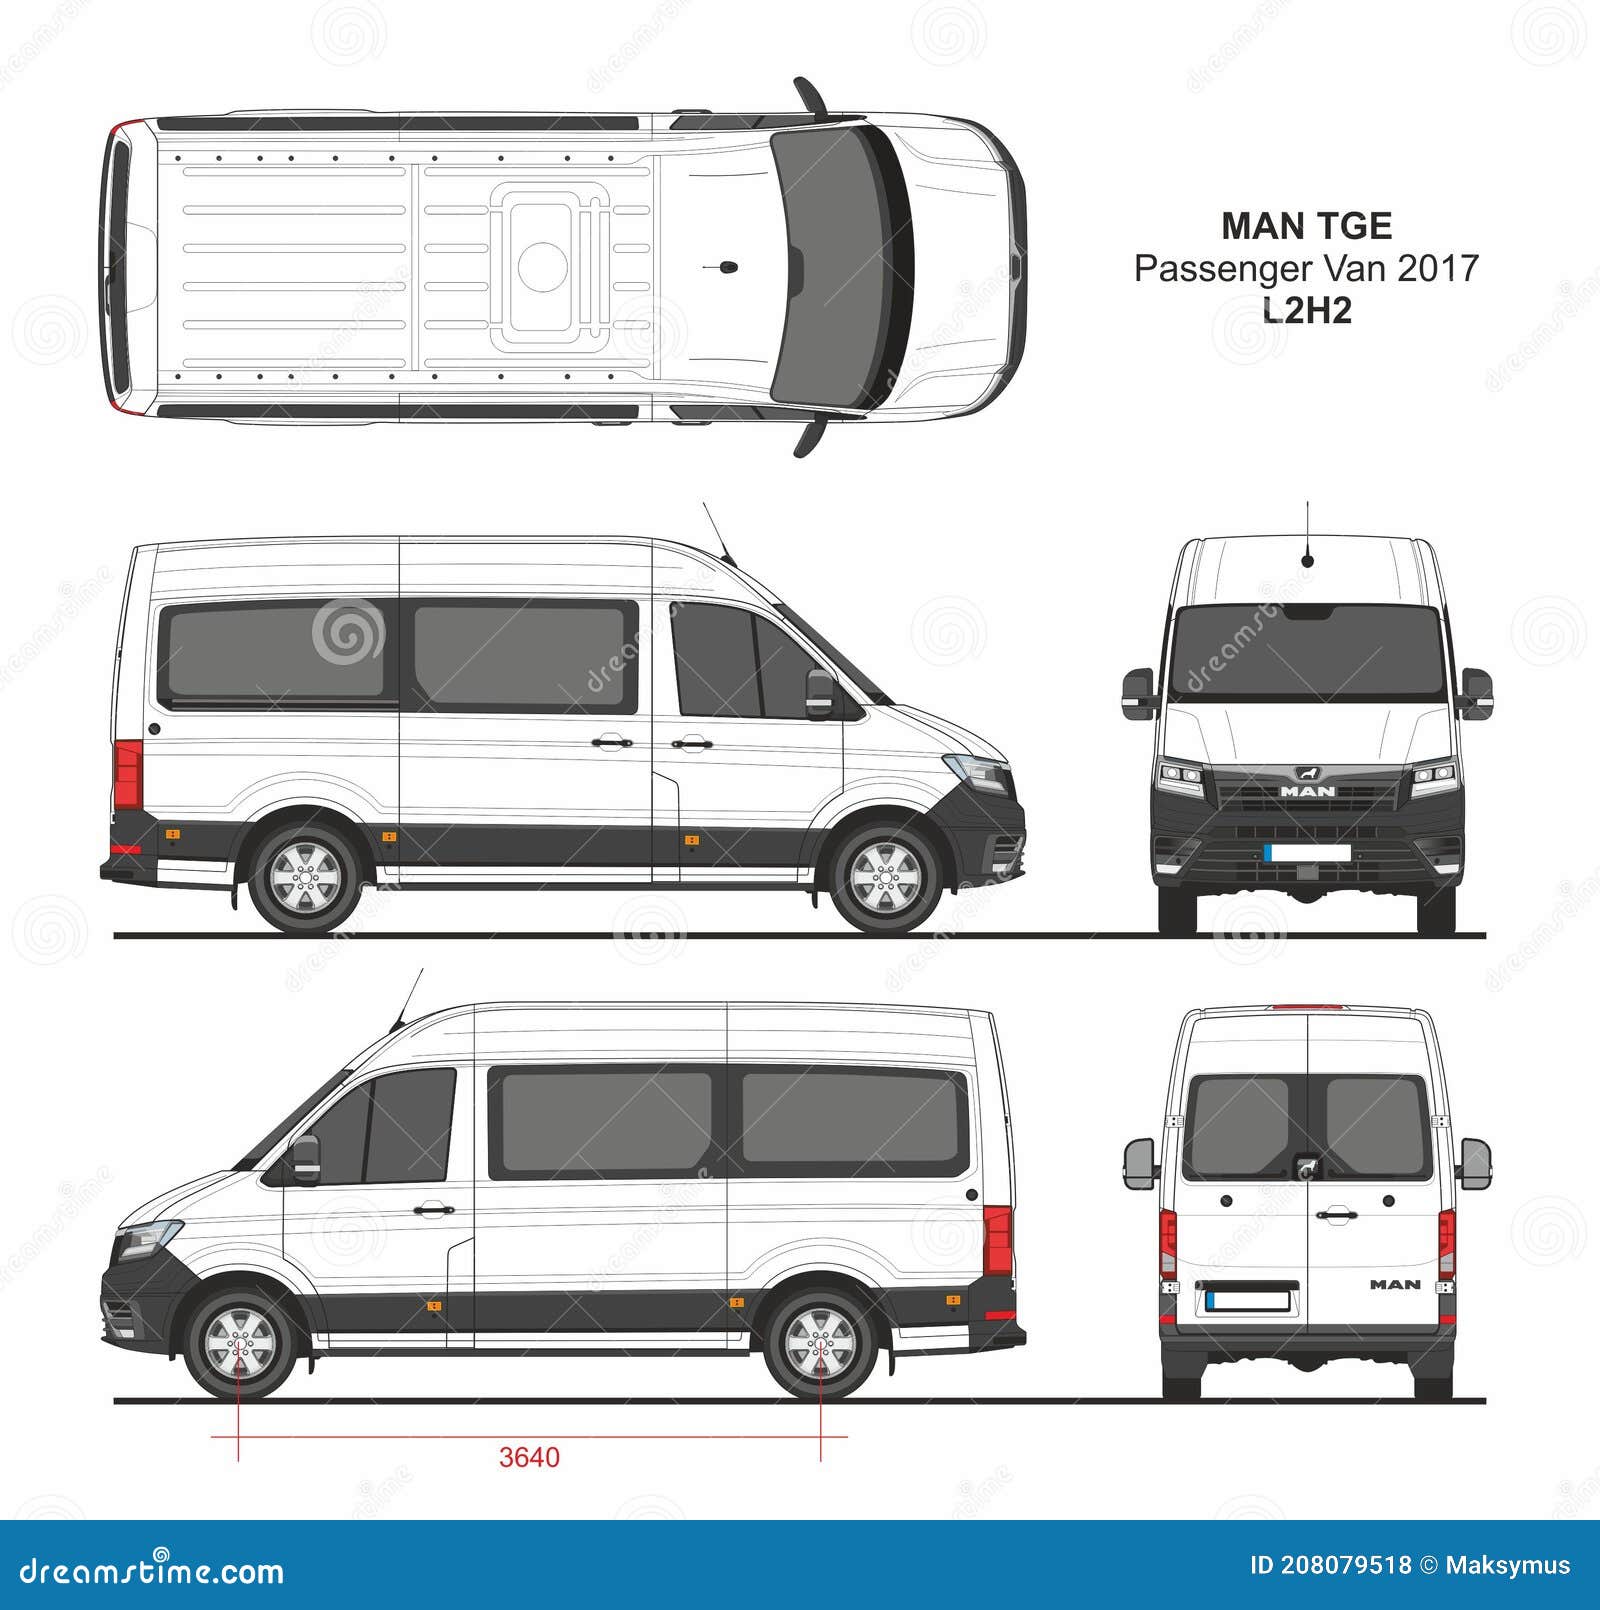 https://thumbs.dreamstime.com/z/man-tge-passenger-van-l-h-detailed-template-design-production-vehicle-wraps-scale-to-208079518.jpg